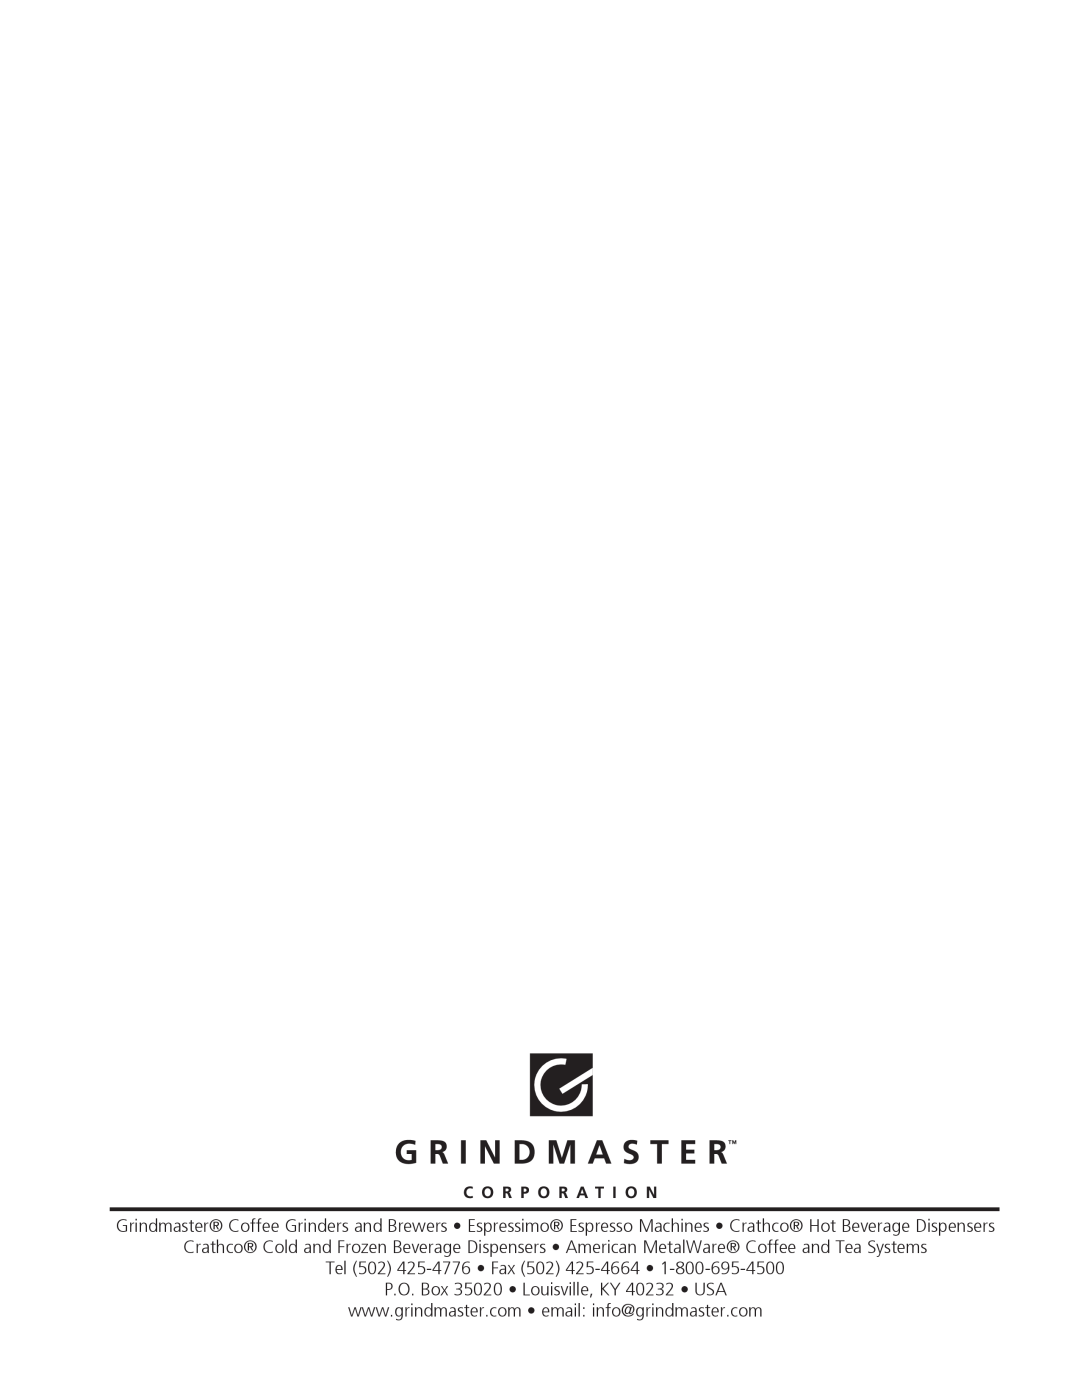 Grindmaster 67710E service manual Tel 502 425-4776 Fax, P.O. Box 35020 Louisville, KY 40232 USA 